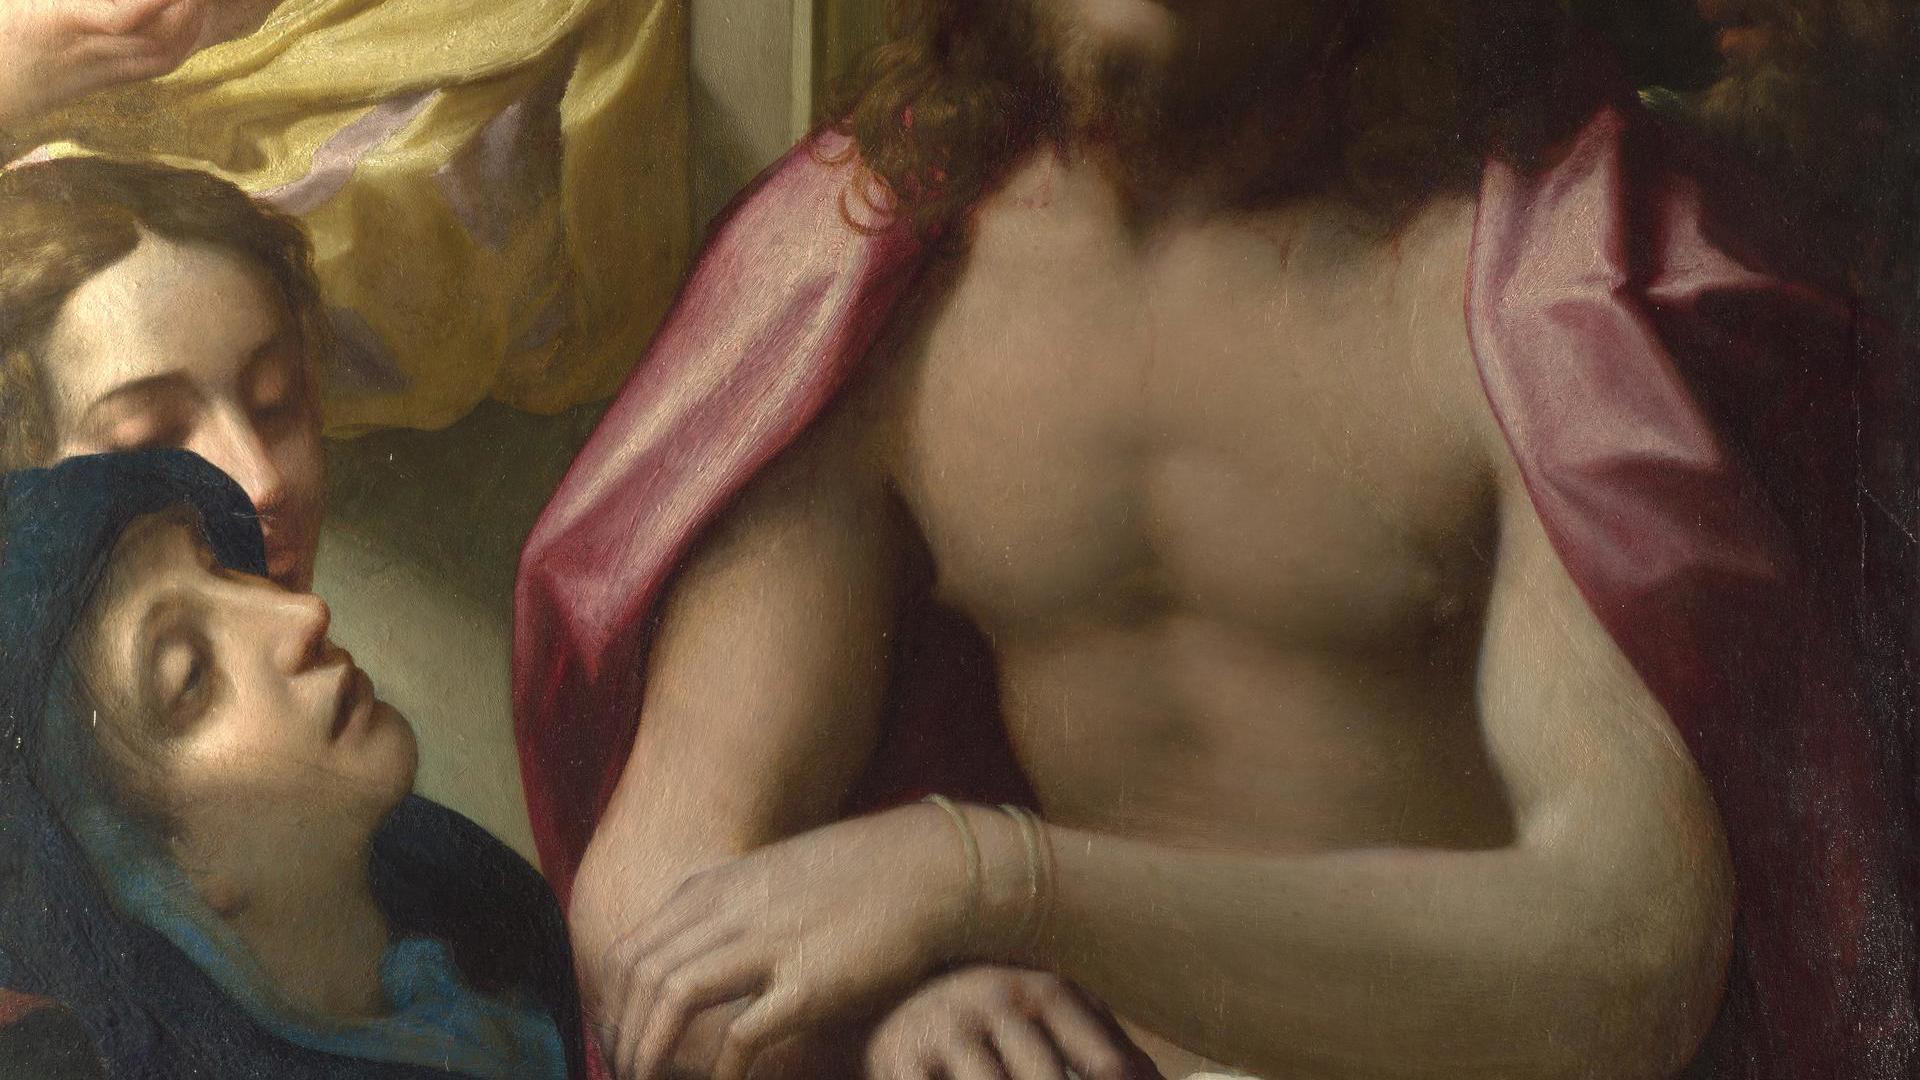 Christ presented to the People (Ecce Homo) by Correggio